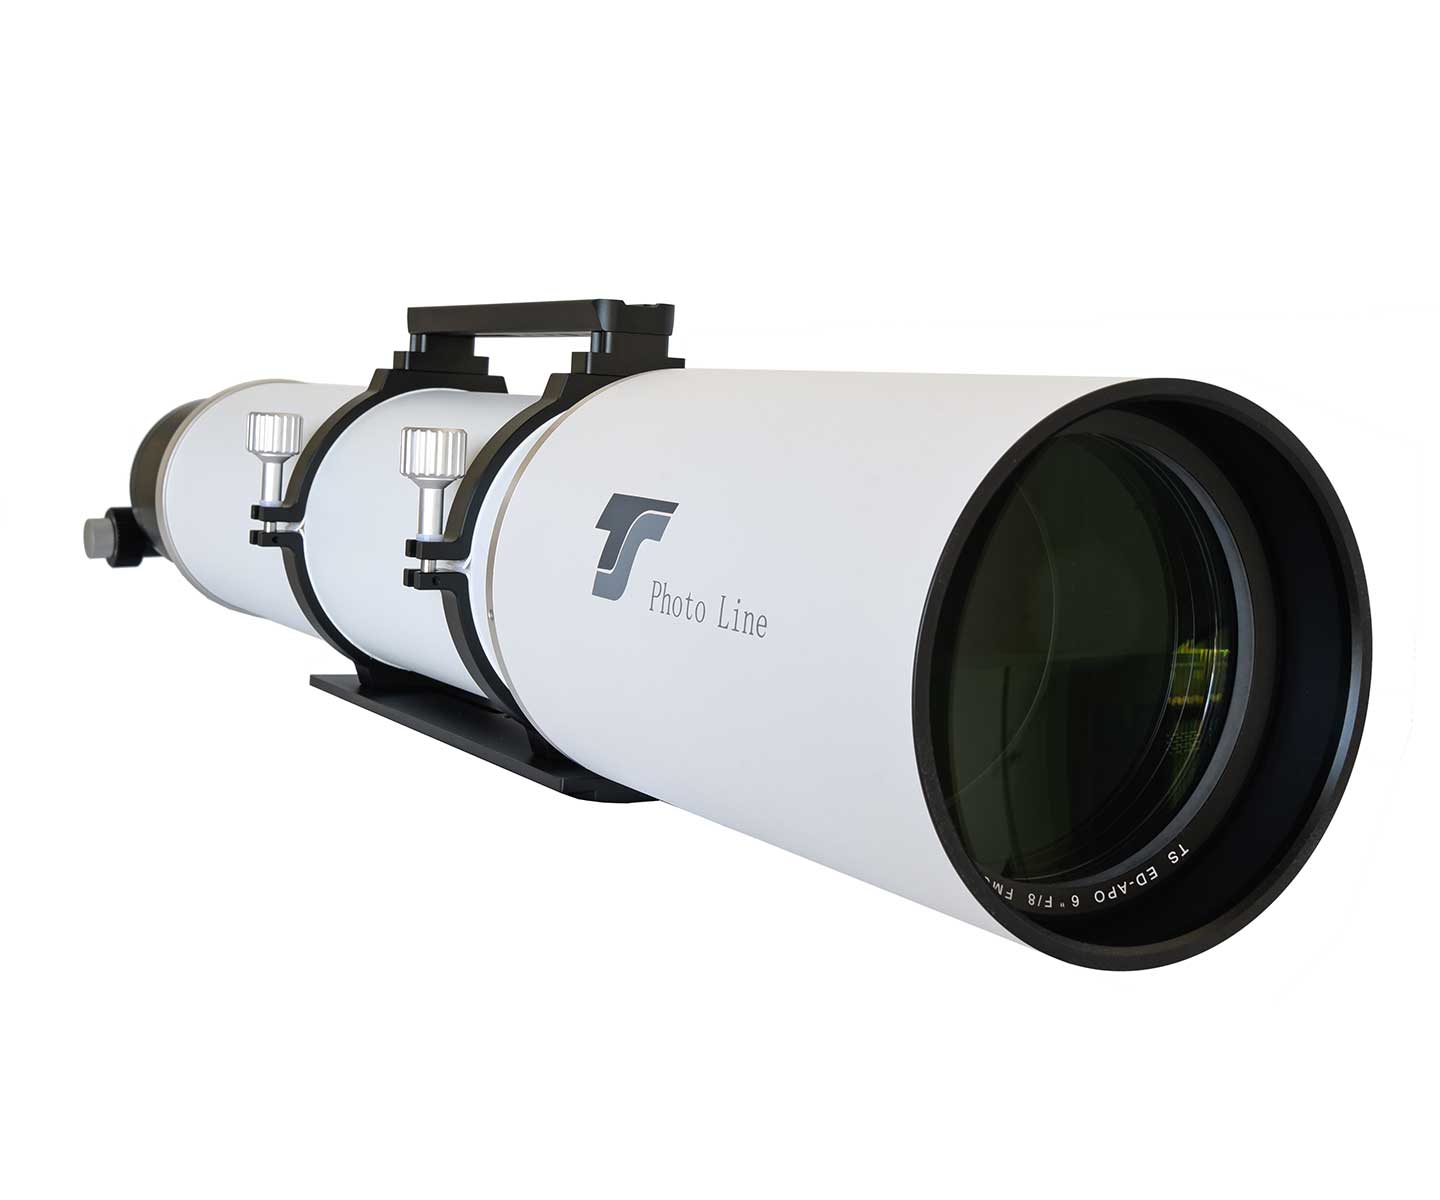   TS-Optics Photoline 150 mm f/8 FPL53 Lanthan Dublet Apo - 2.5" Focuser [EN]  